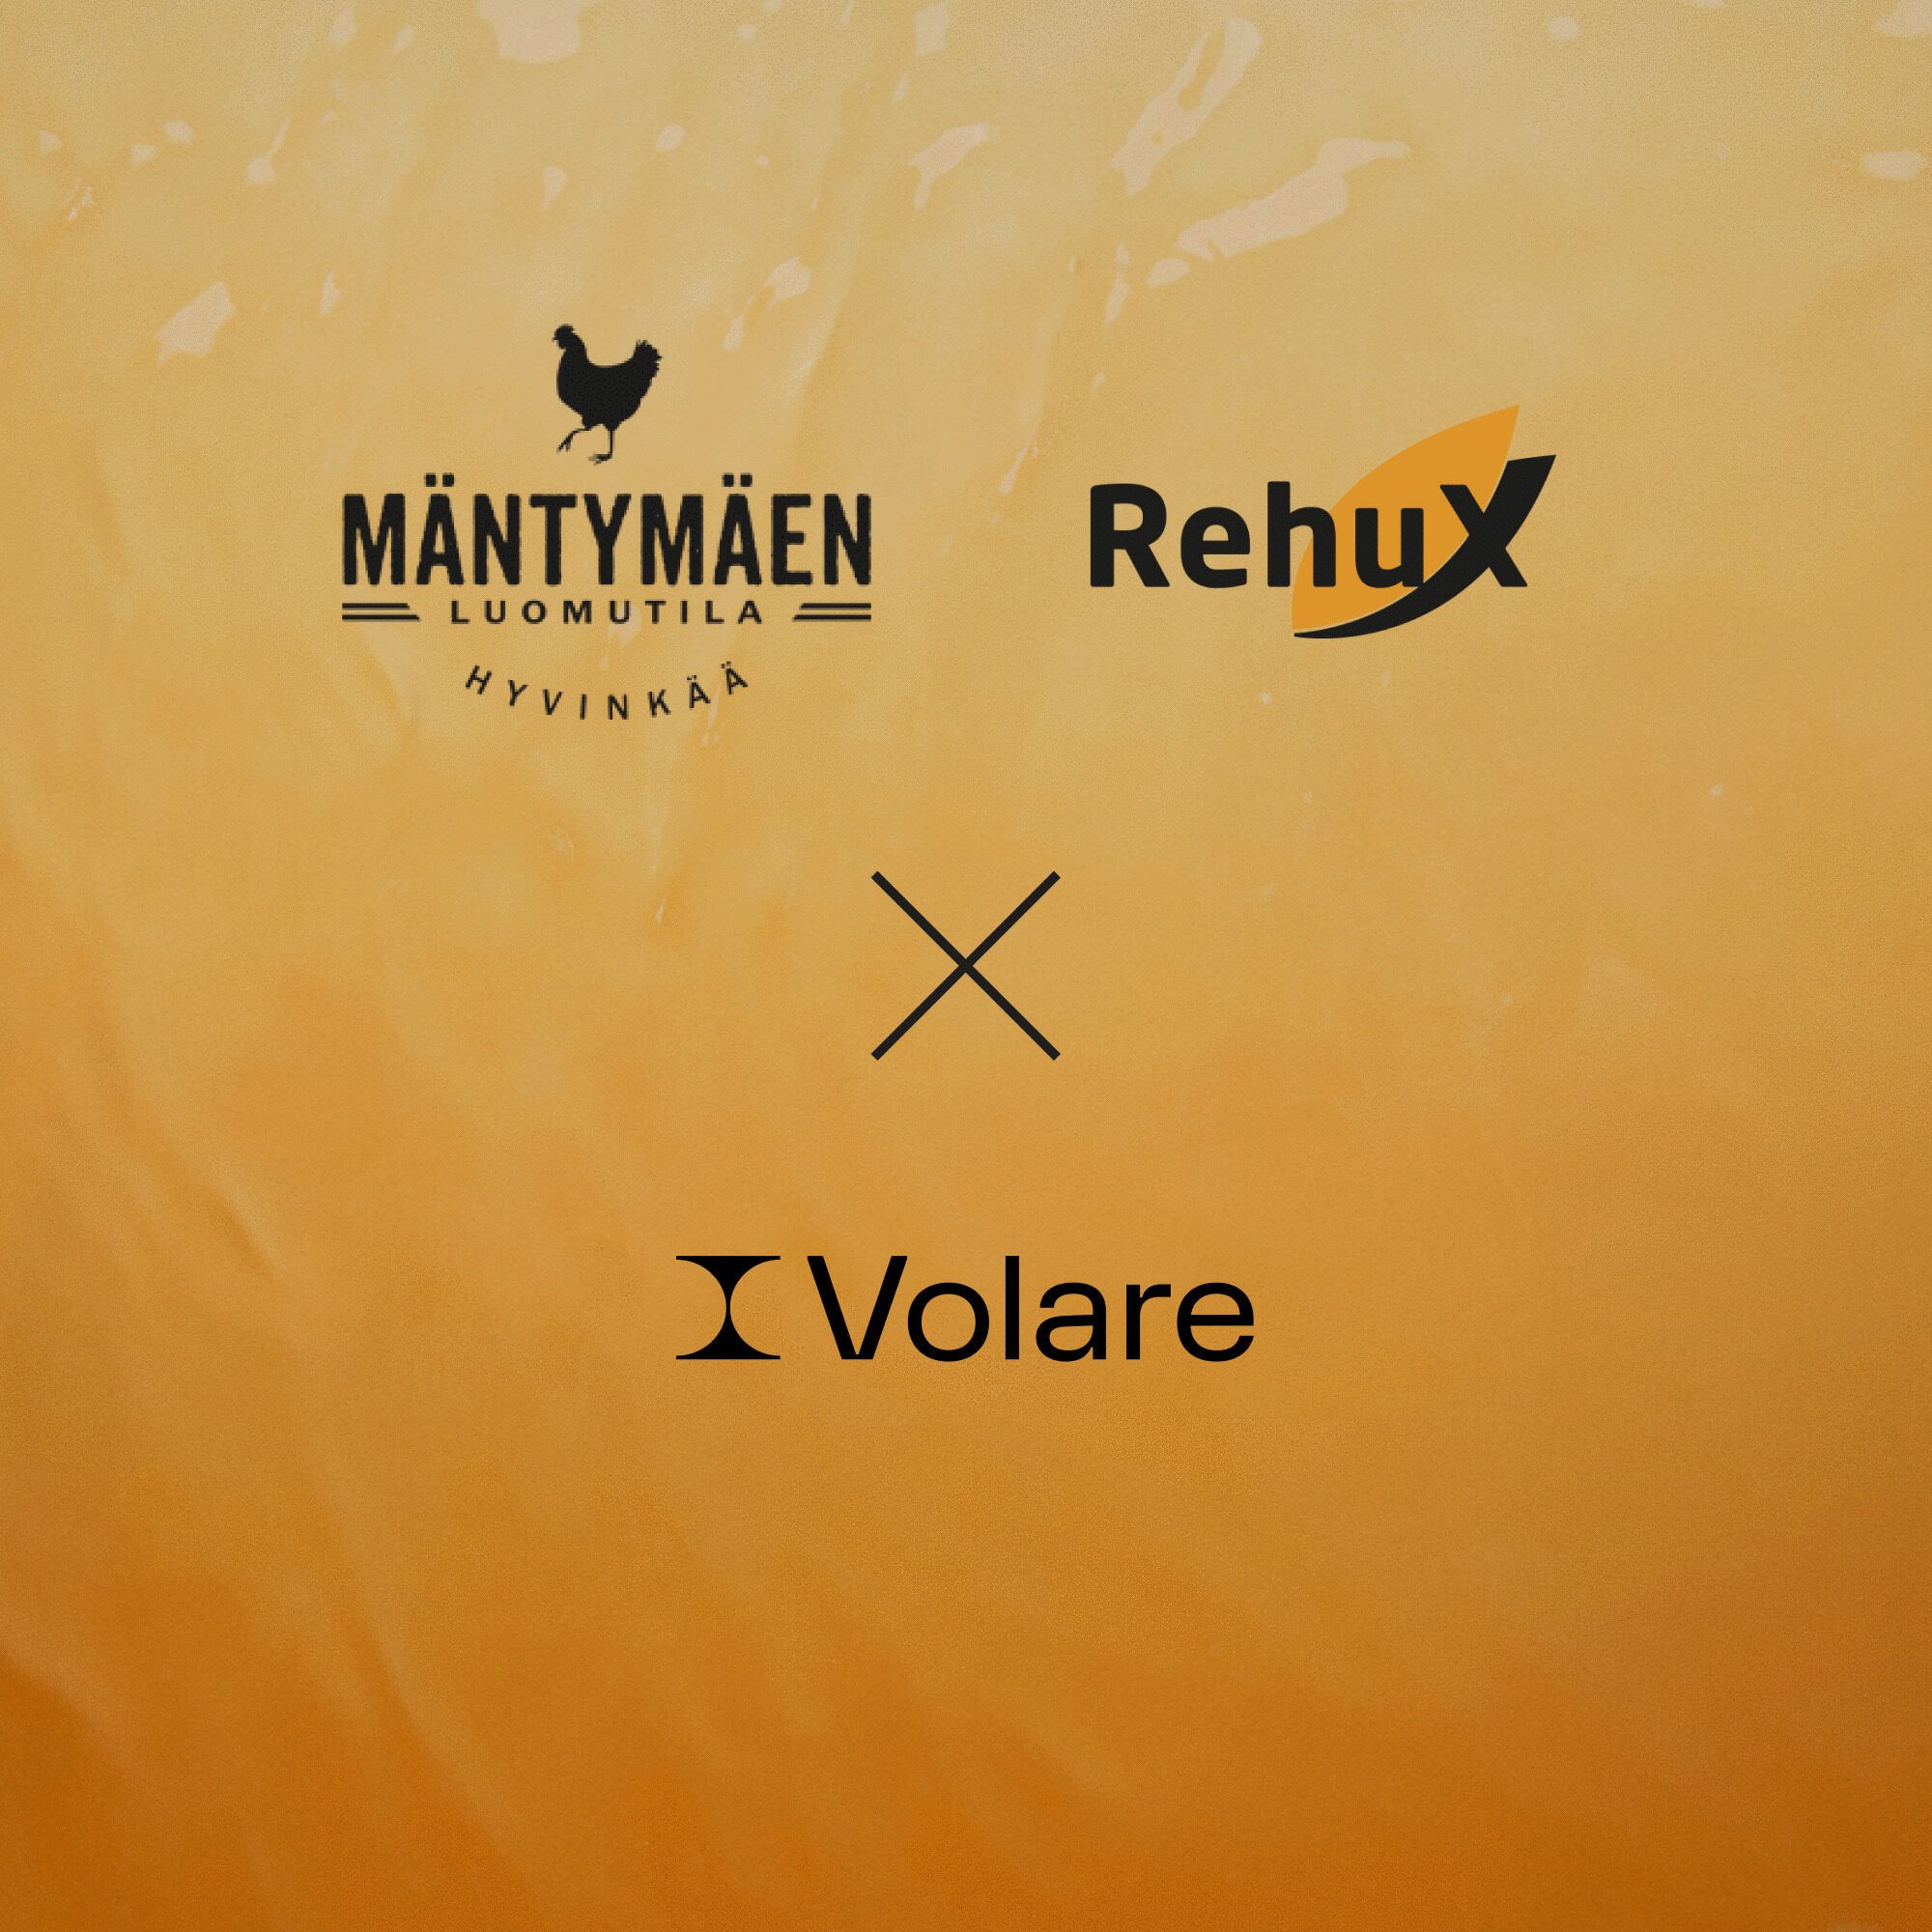 Mäntymäen Luomutila, Rehux and Volare logos